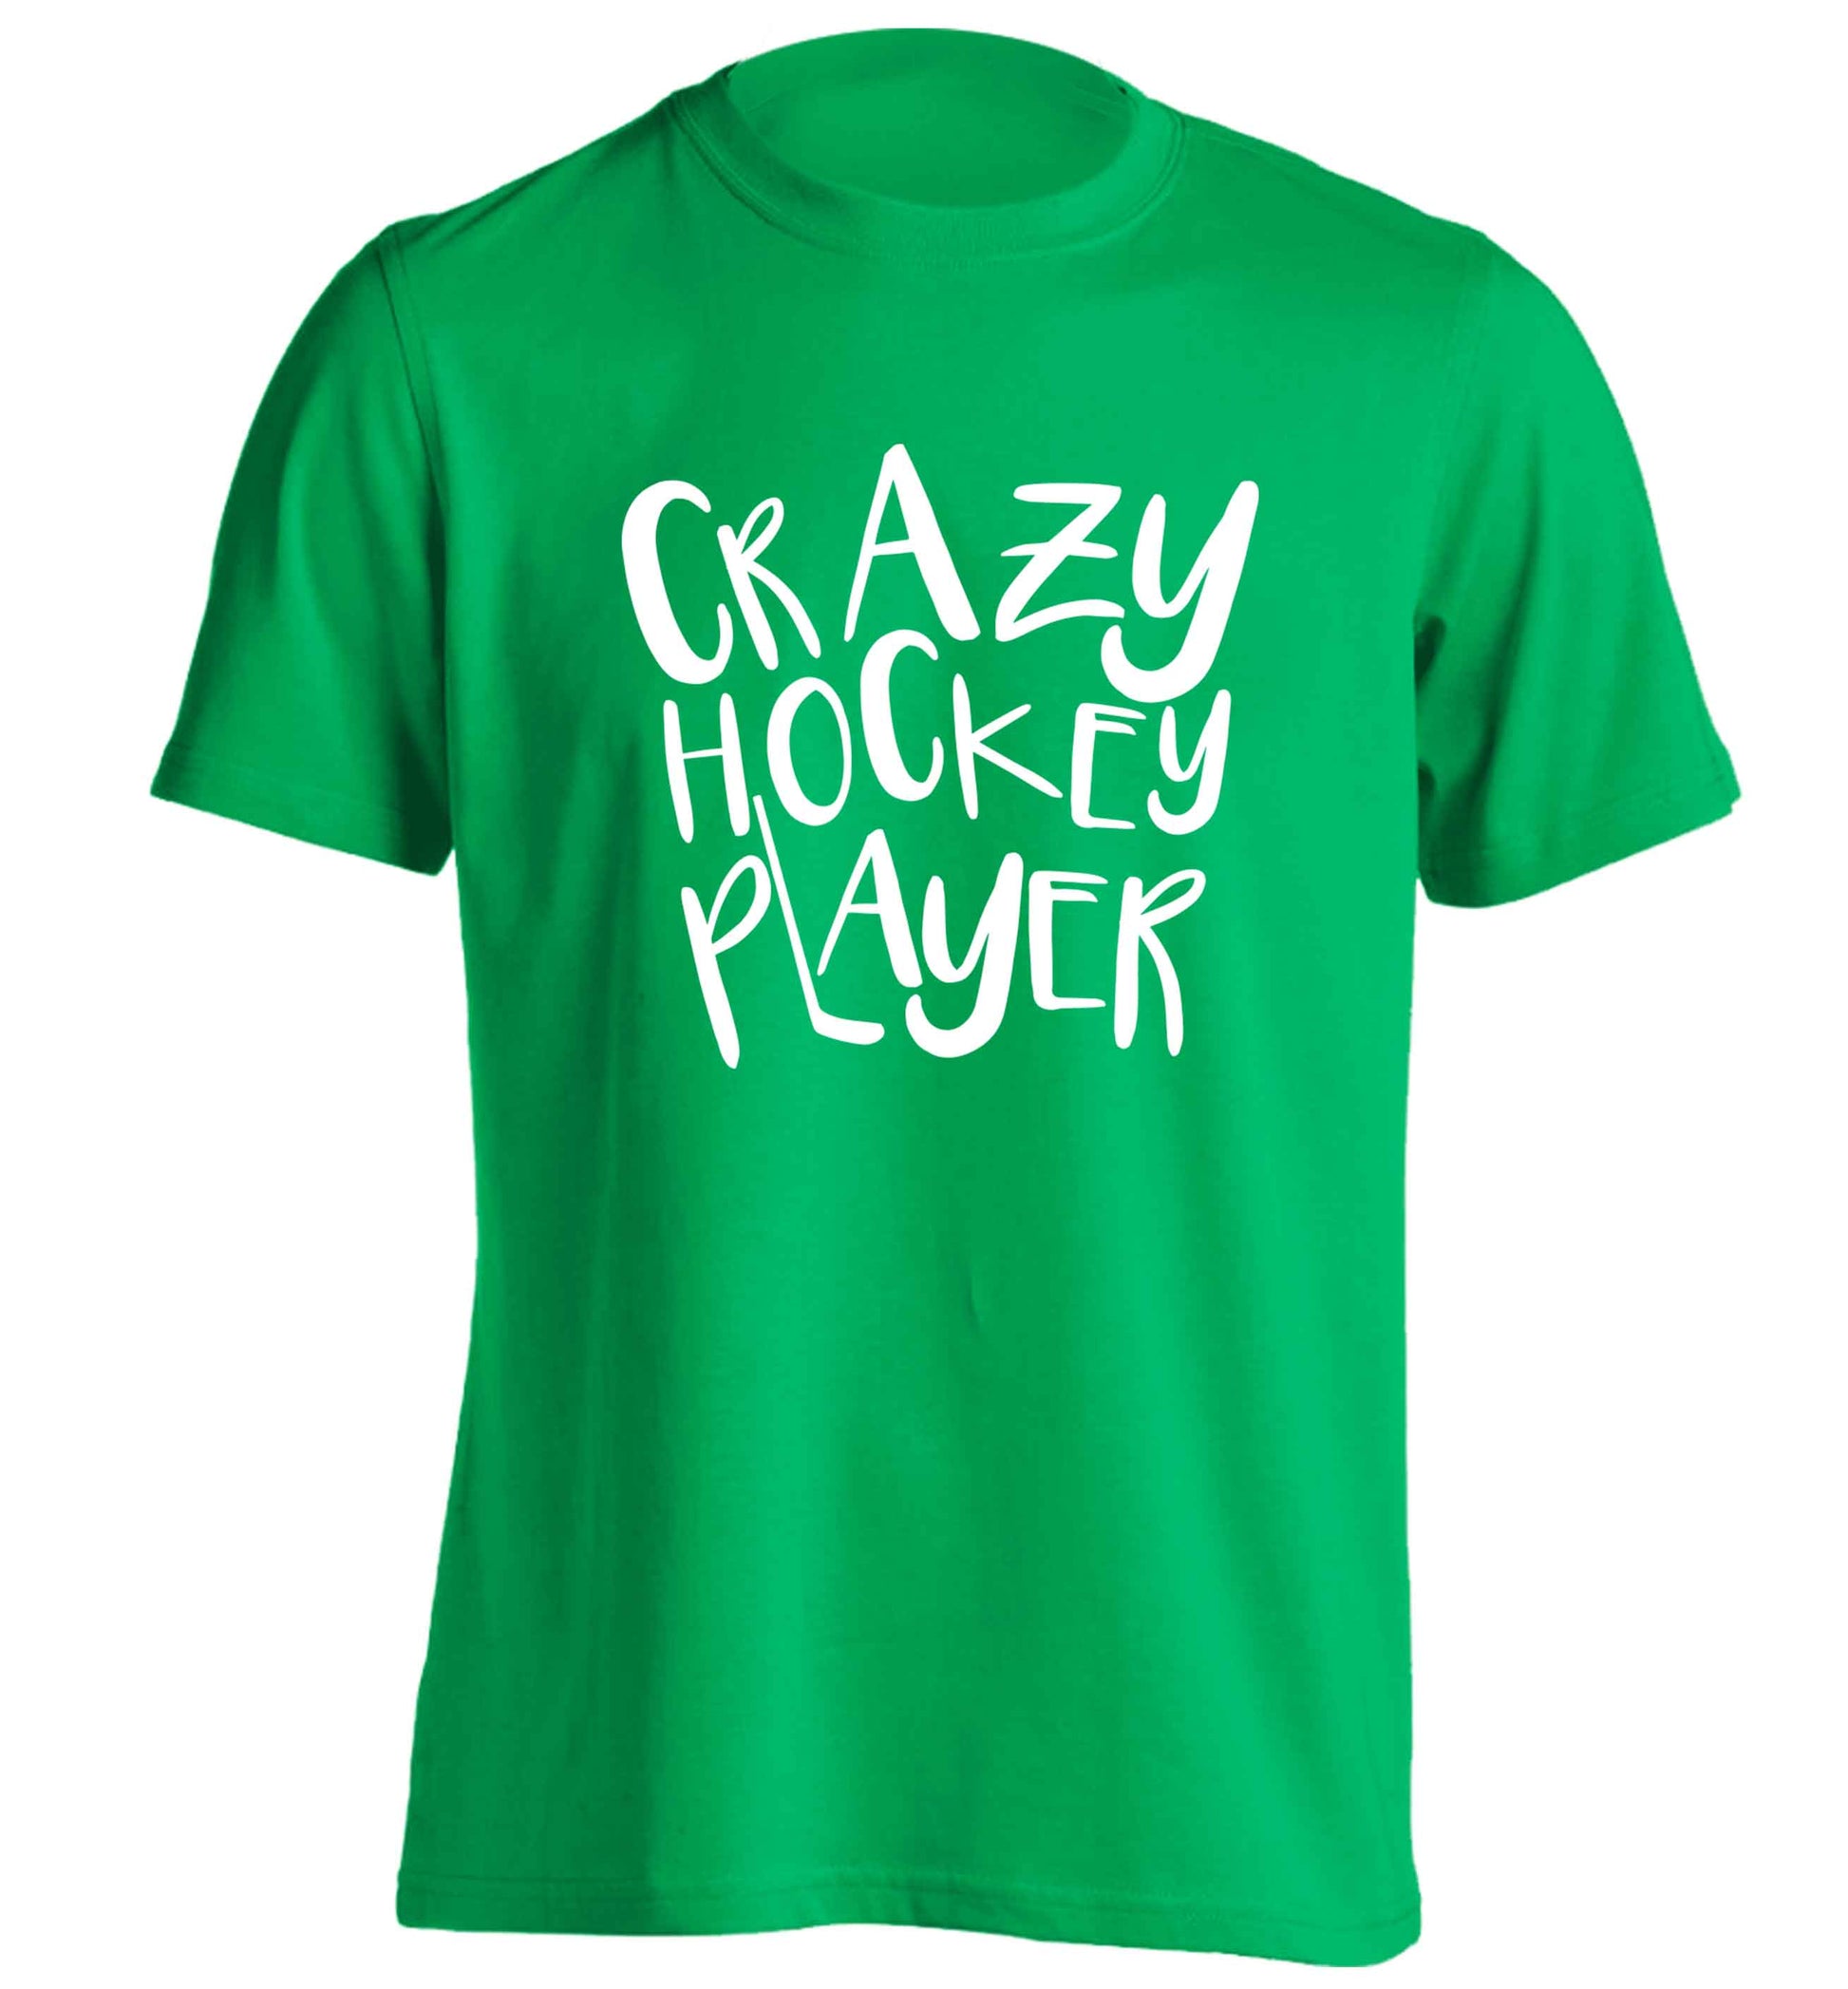 Crazy hockey player adults unisex green Tshirt 2XL